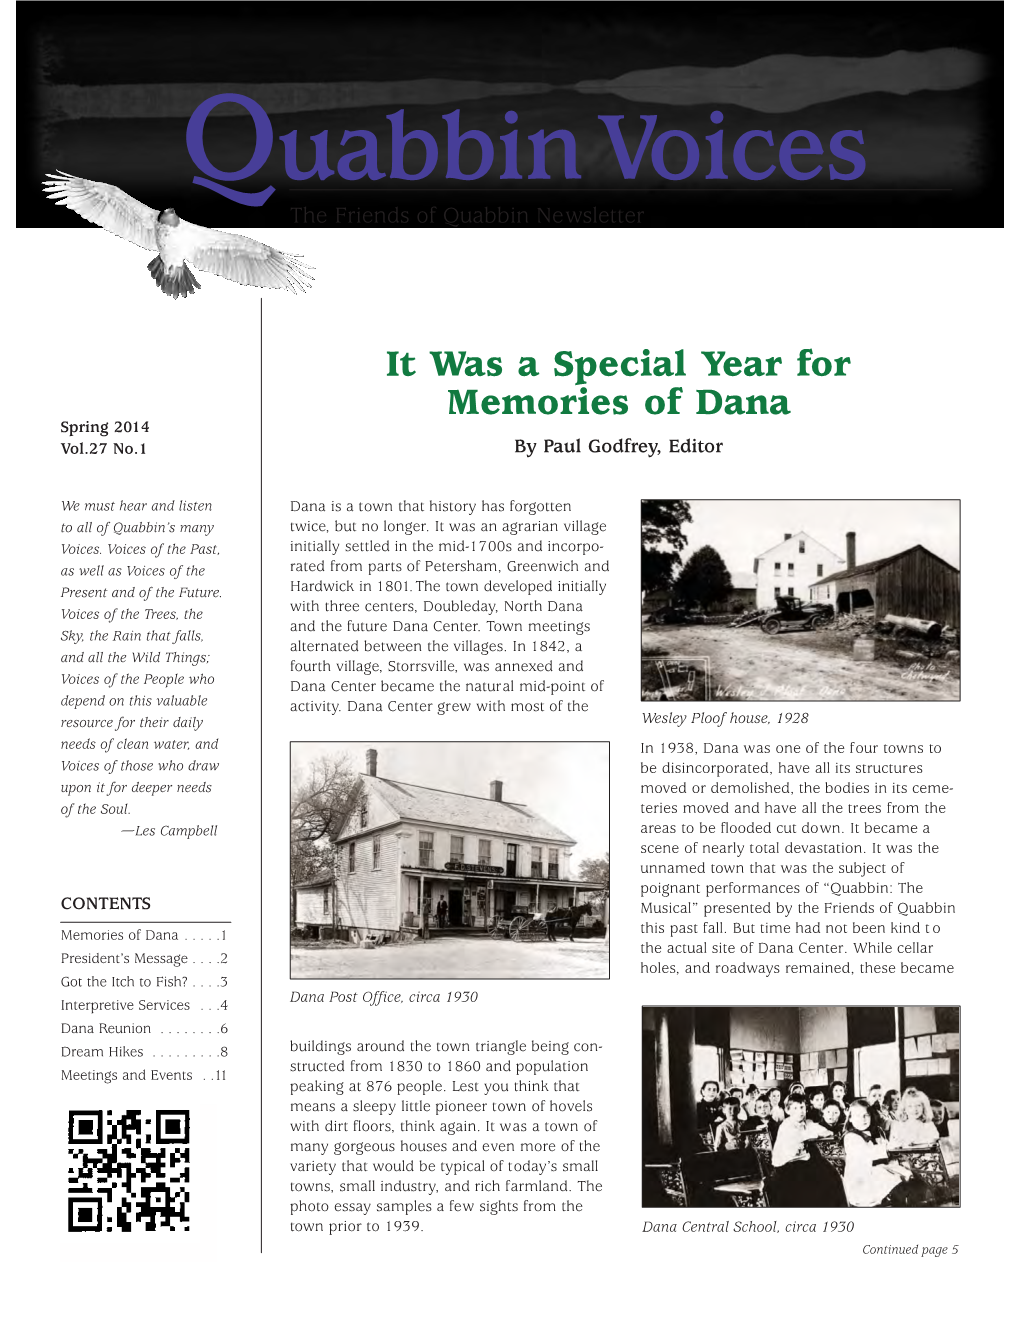 Spring 2014 Quabbin Voices Newsletter